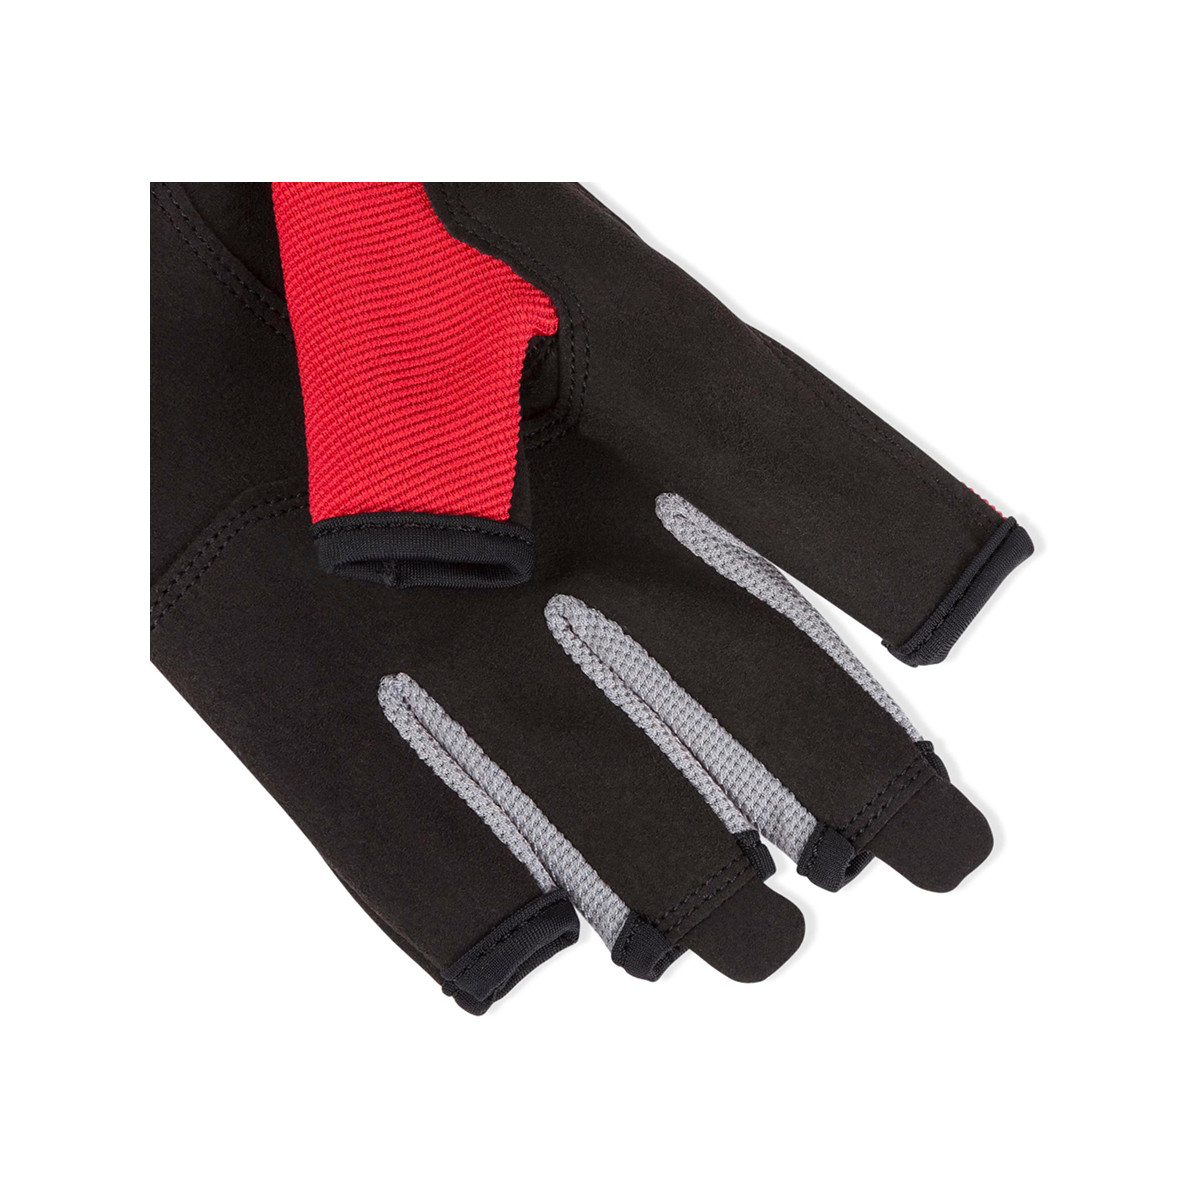 Musto Essential gants de voile doigts courts rouge, taille M